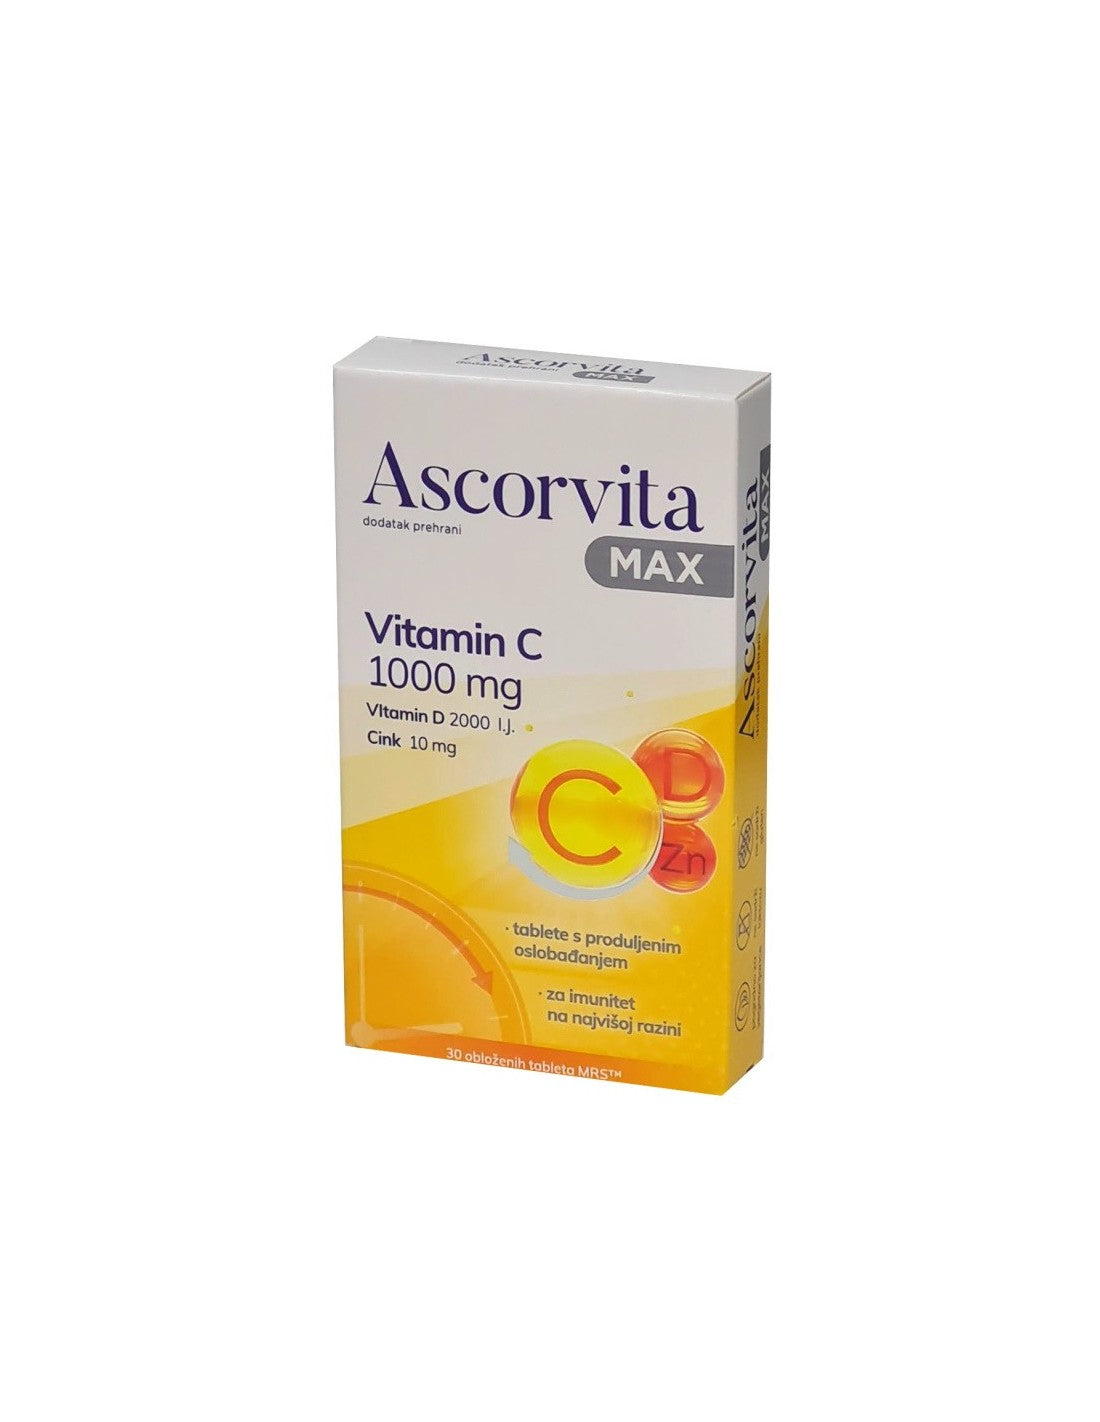 Ascorvita Max tablete, 30 komada – Apoteka.hr